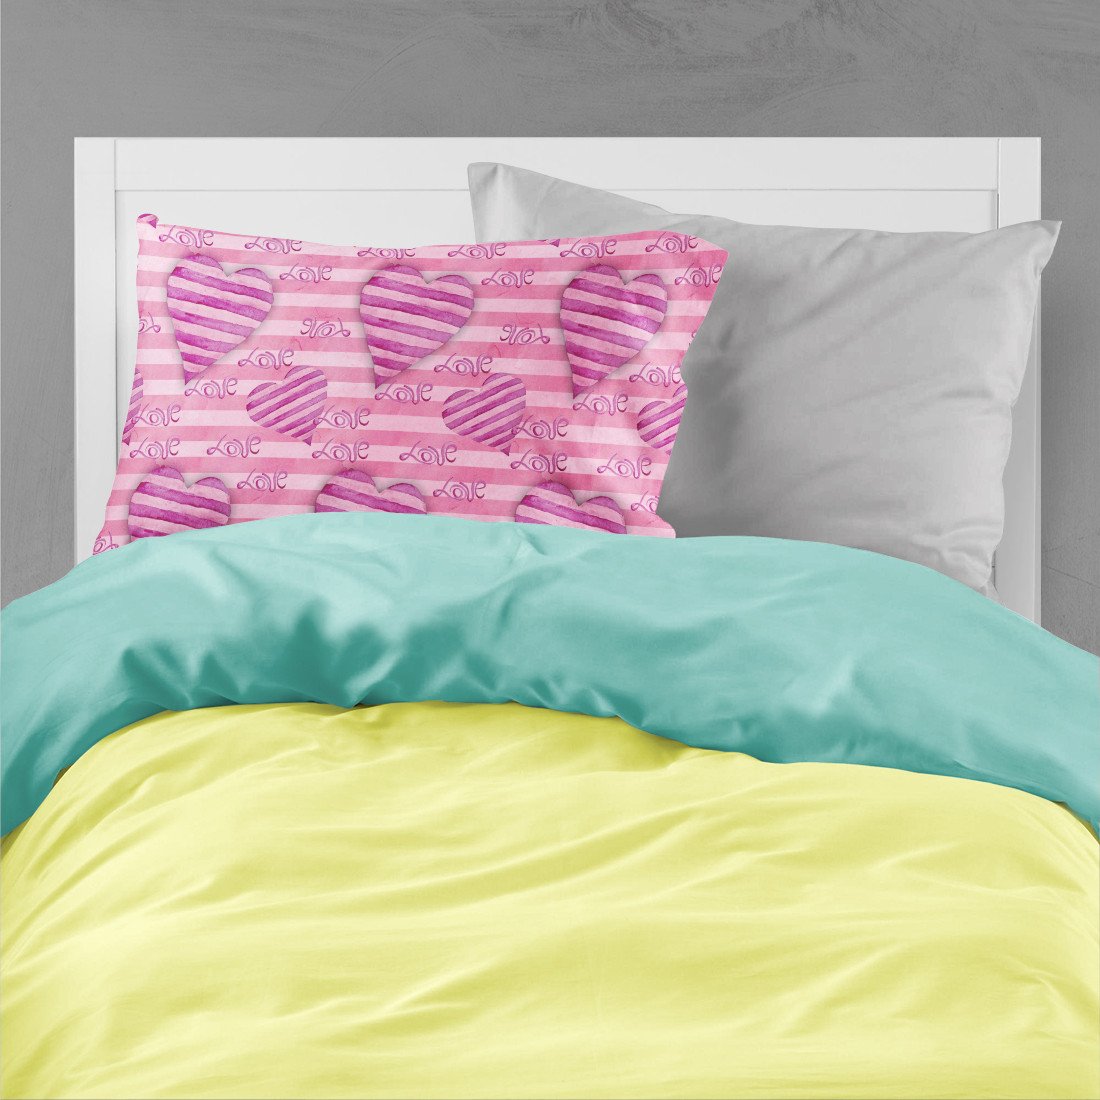 Watercolor Hot Pink Striped Hearts Fabric Standard Pillowcase BB7566PILLOWCASE by Caroline's Treasures